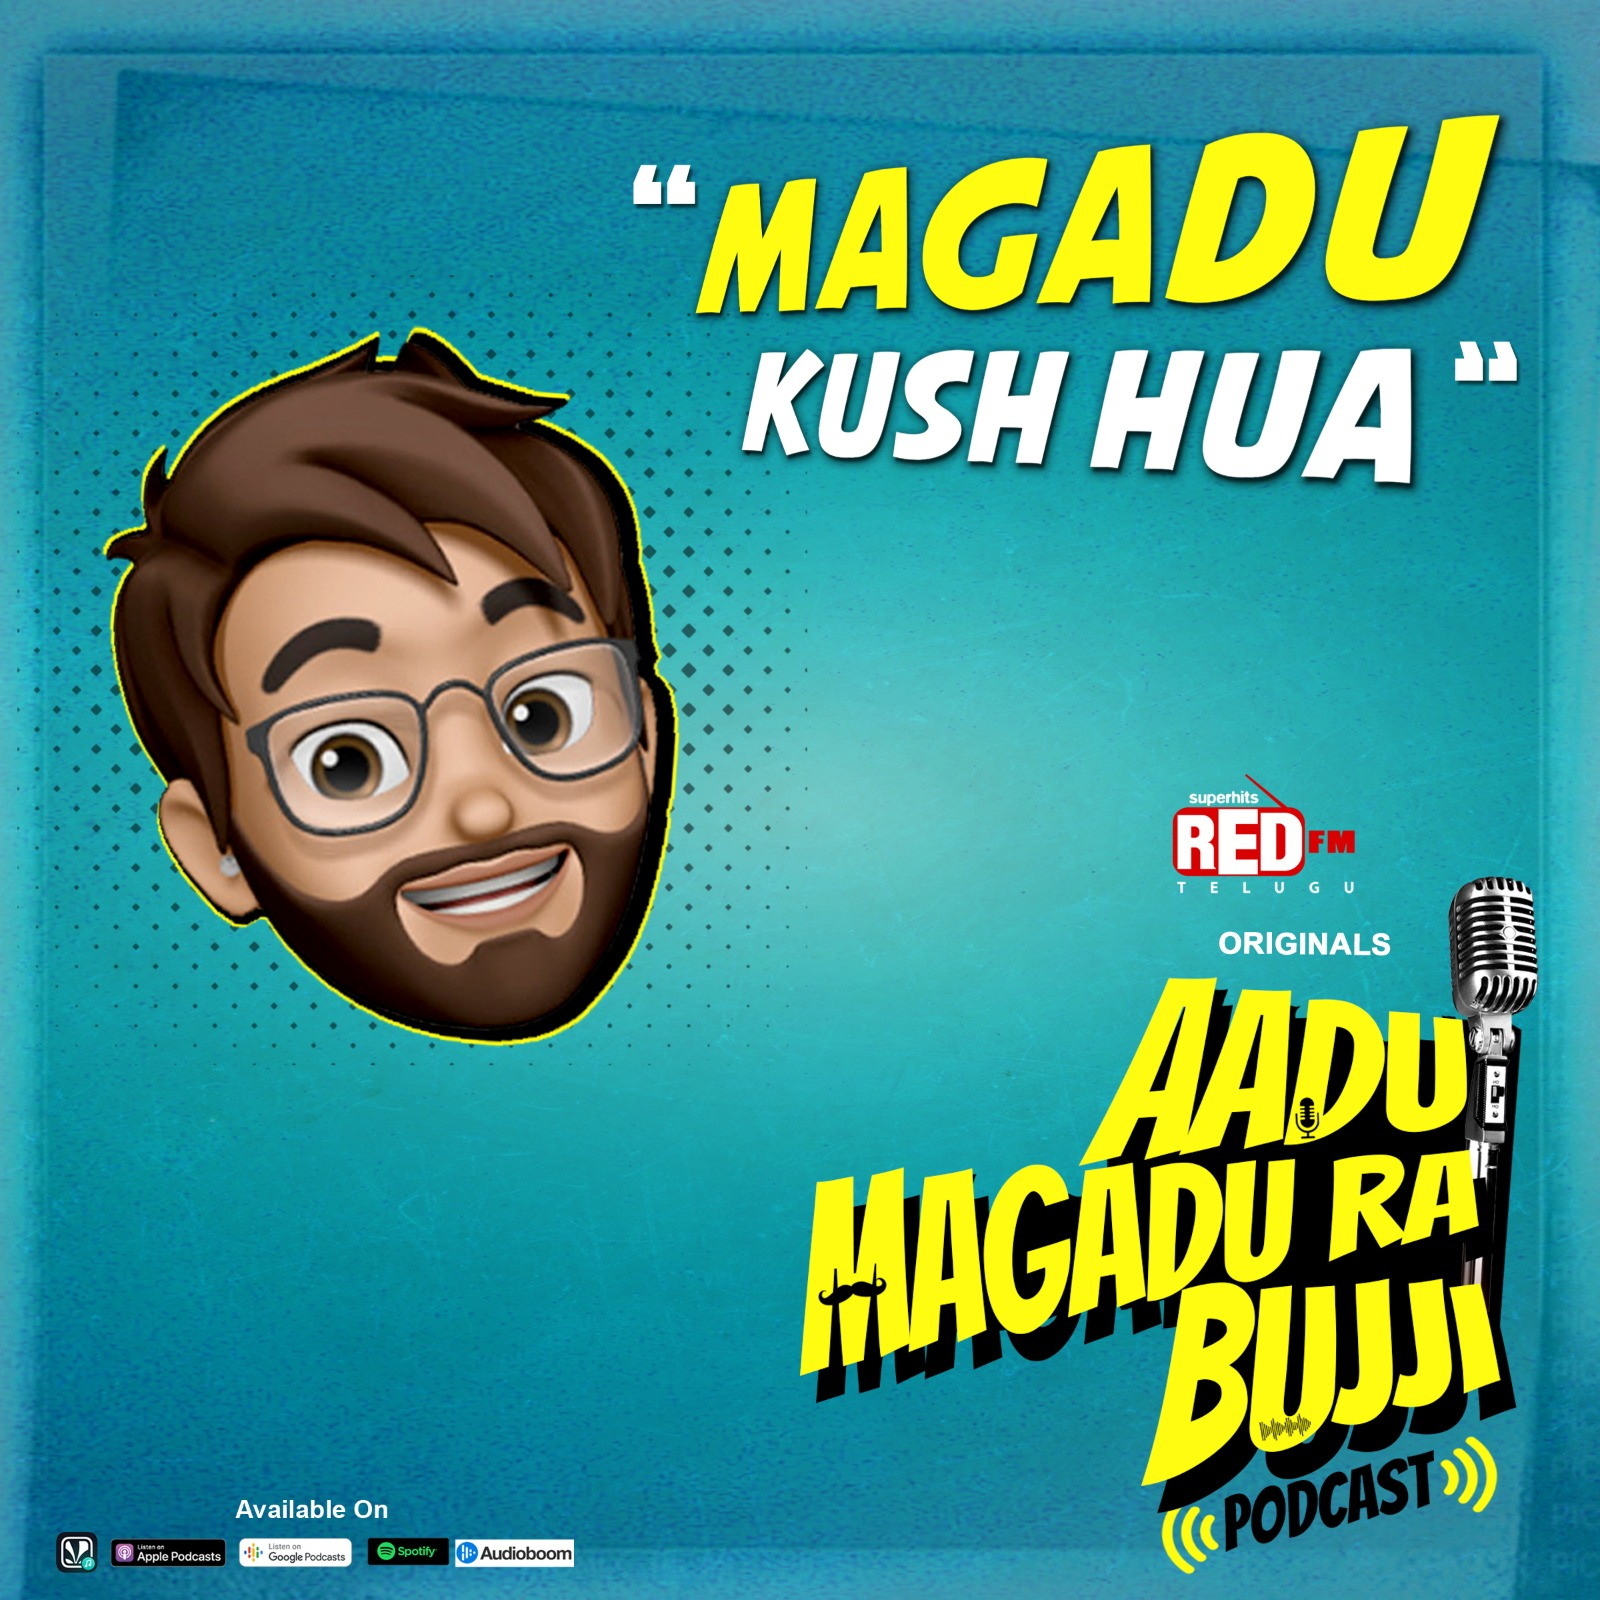 Magadu Kush Hua | E90 | Aadu Magadu Ra Bujji | Red FM Telugu